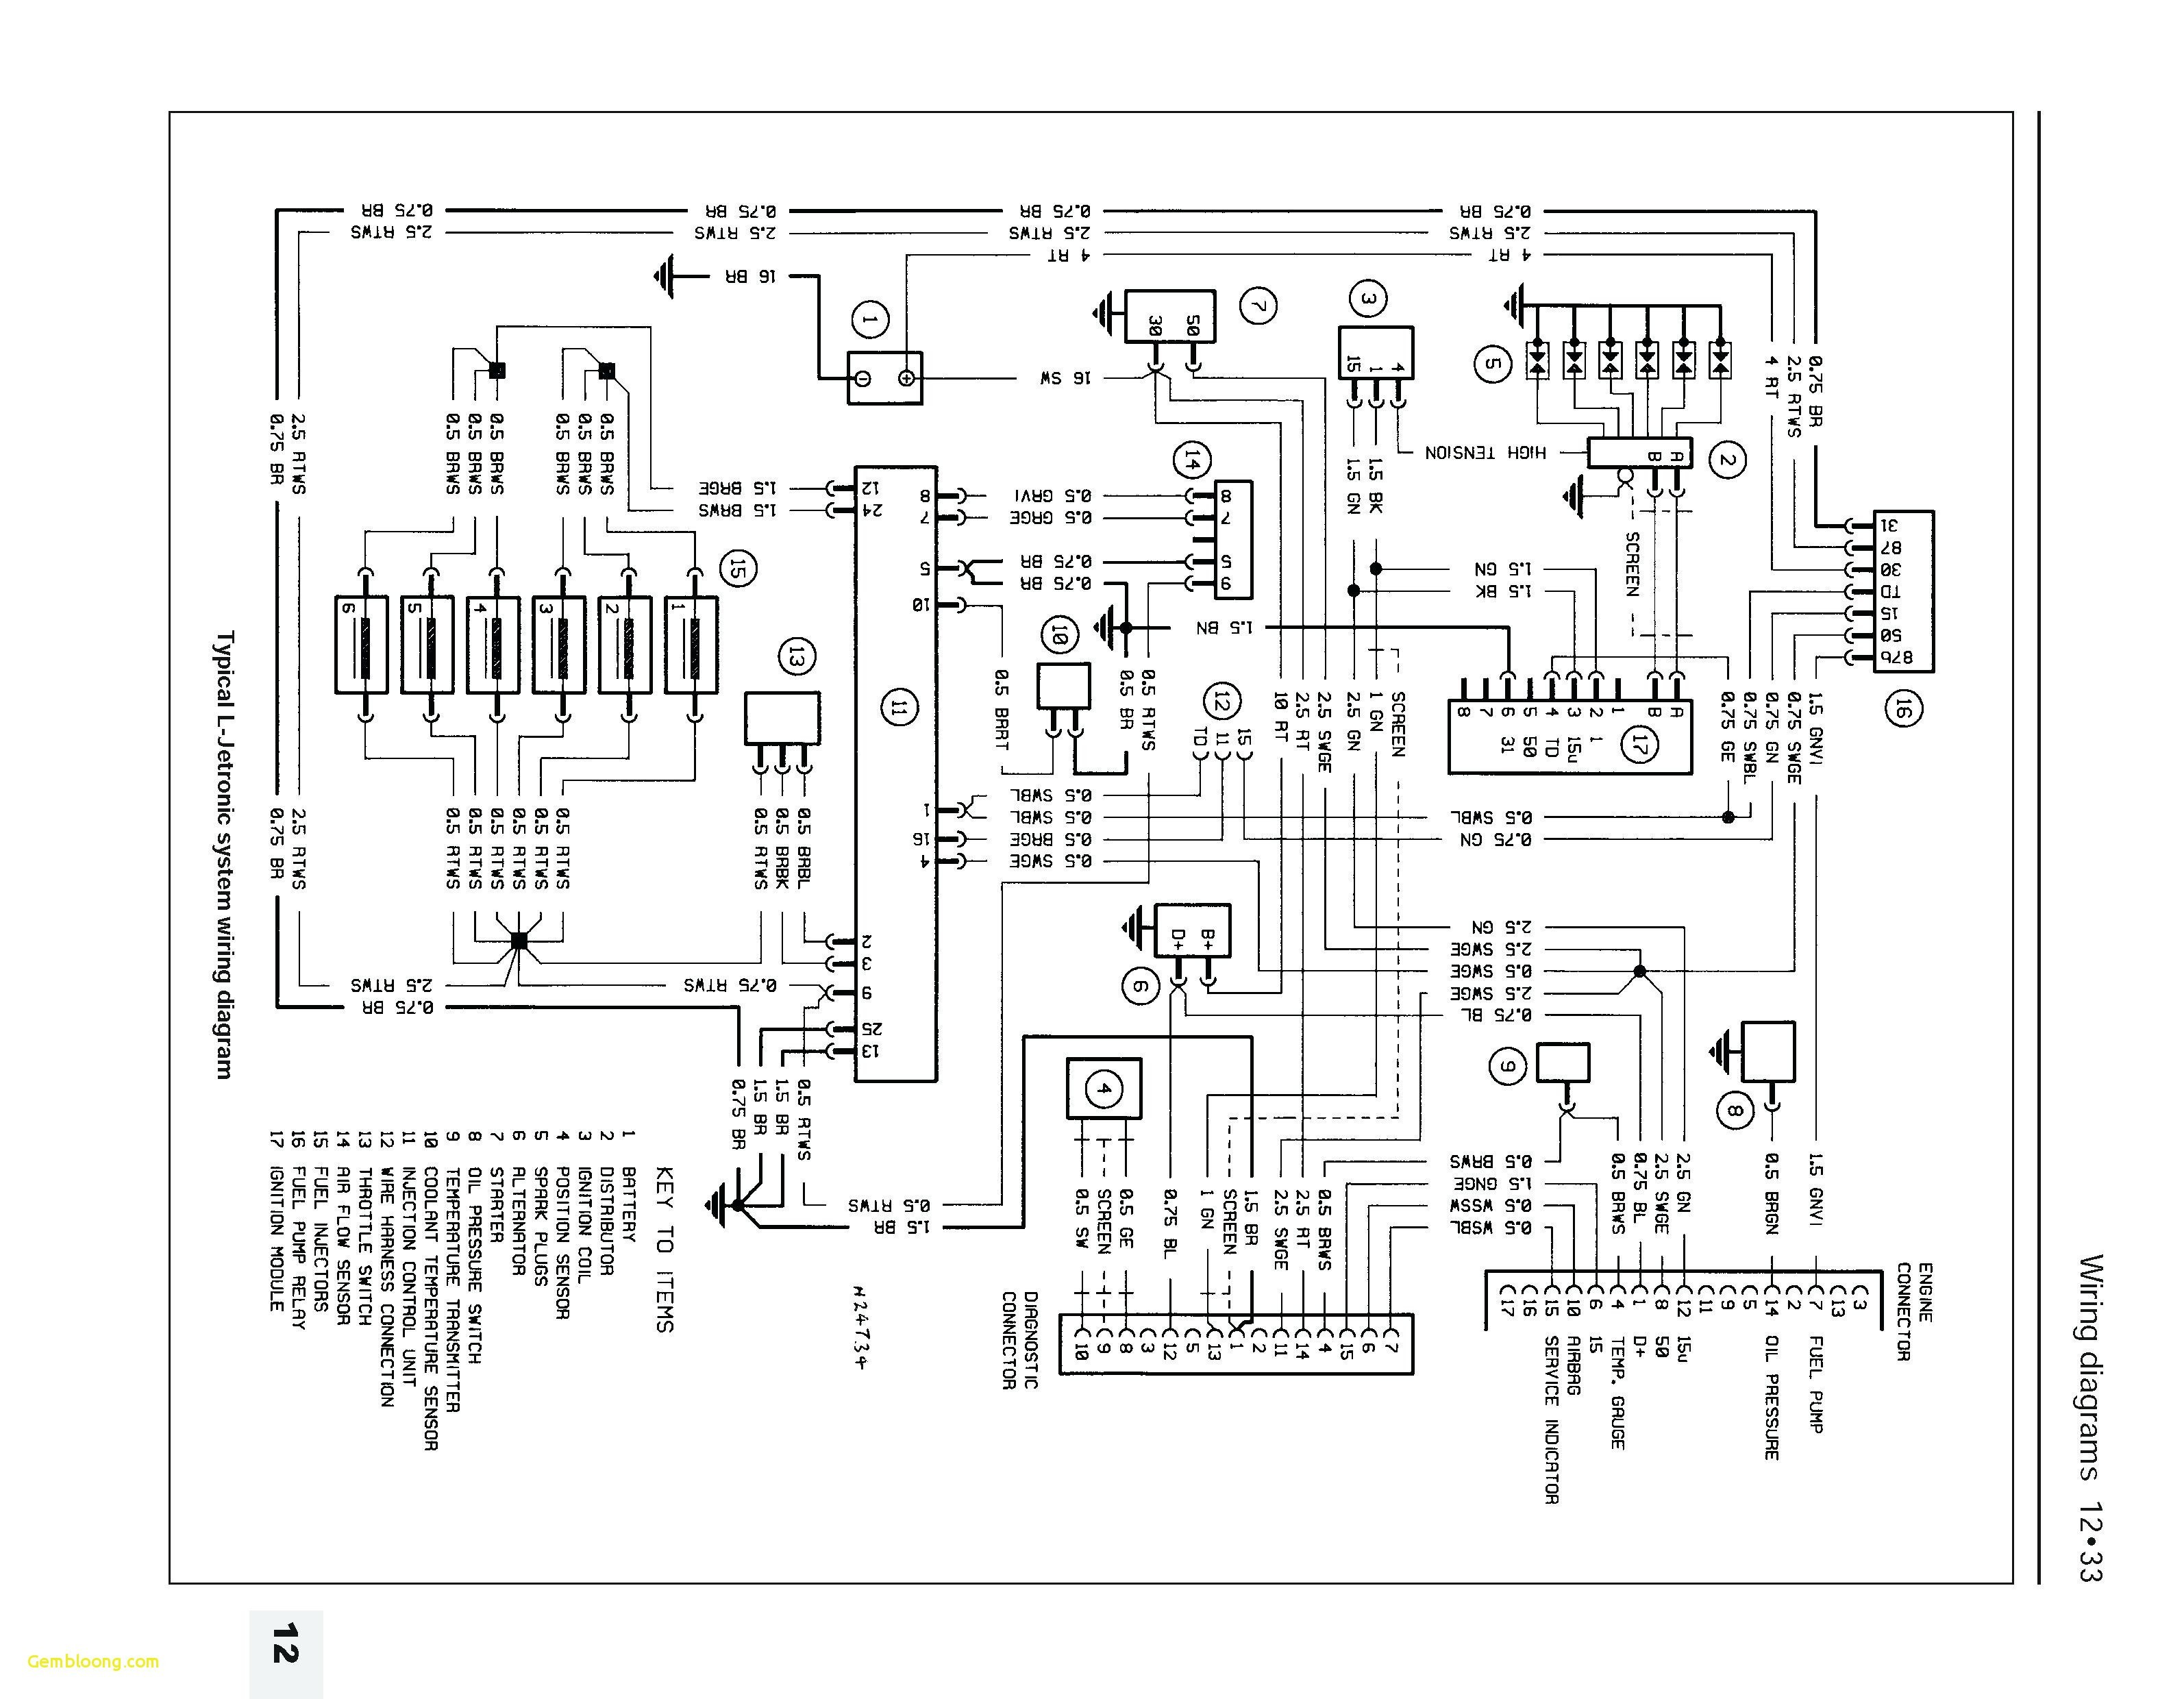 Bmw 318i Engine Diagram Bmw 318i Wiring Diagram Wiring Diagram Go Of Bmw 318i Engine Diagram